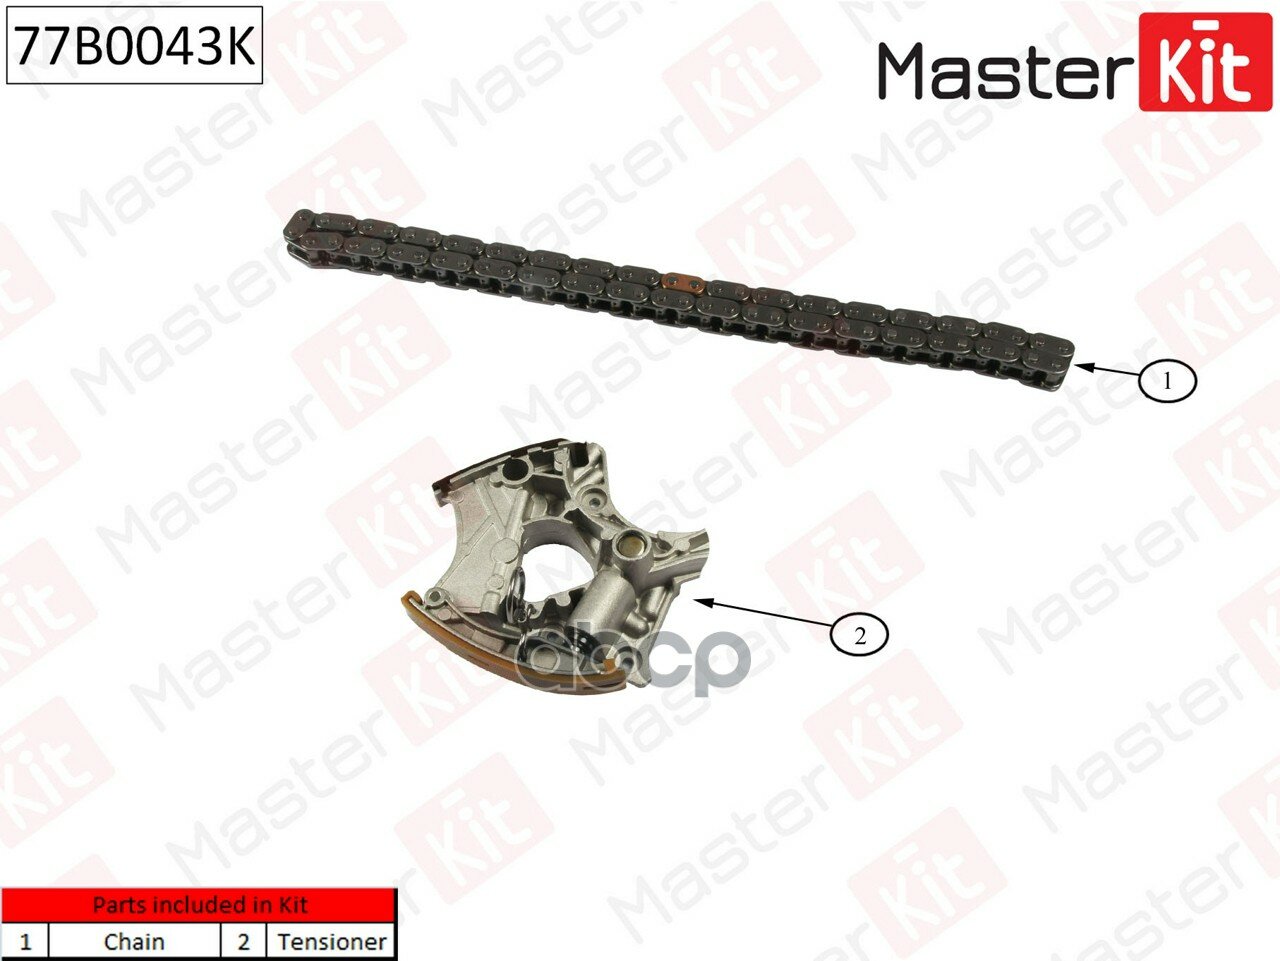 Комплект Цепи Привода Распредвала Audi 3.2Fsi Au04-10 (Без Звездочек) MasterKit арт. 77B0043K